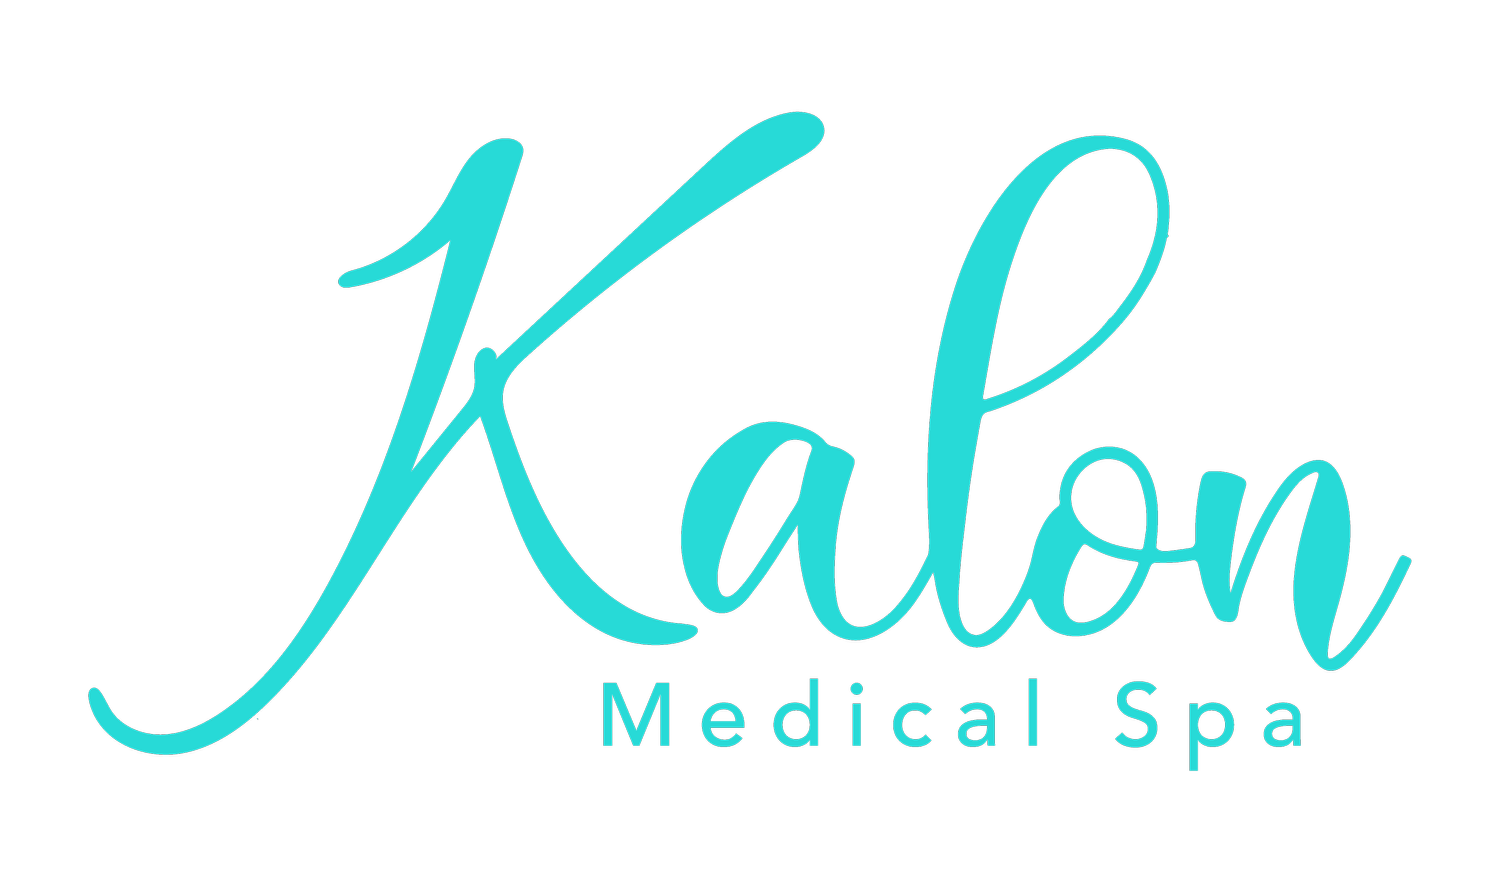 Kalon Medical Spa